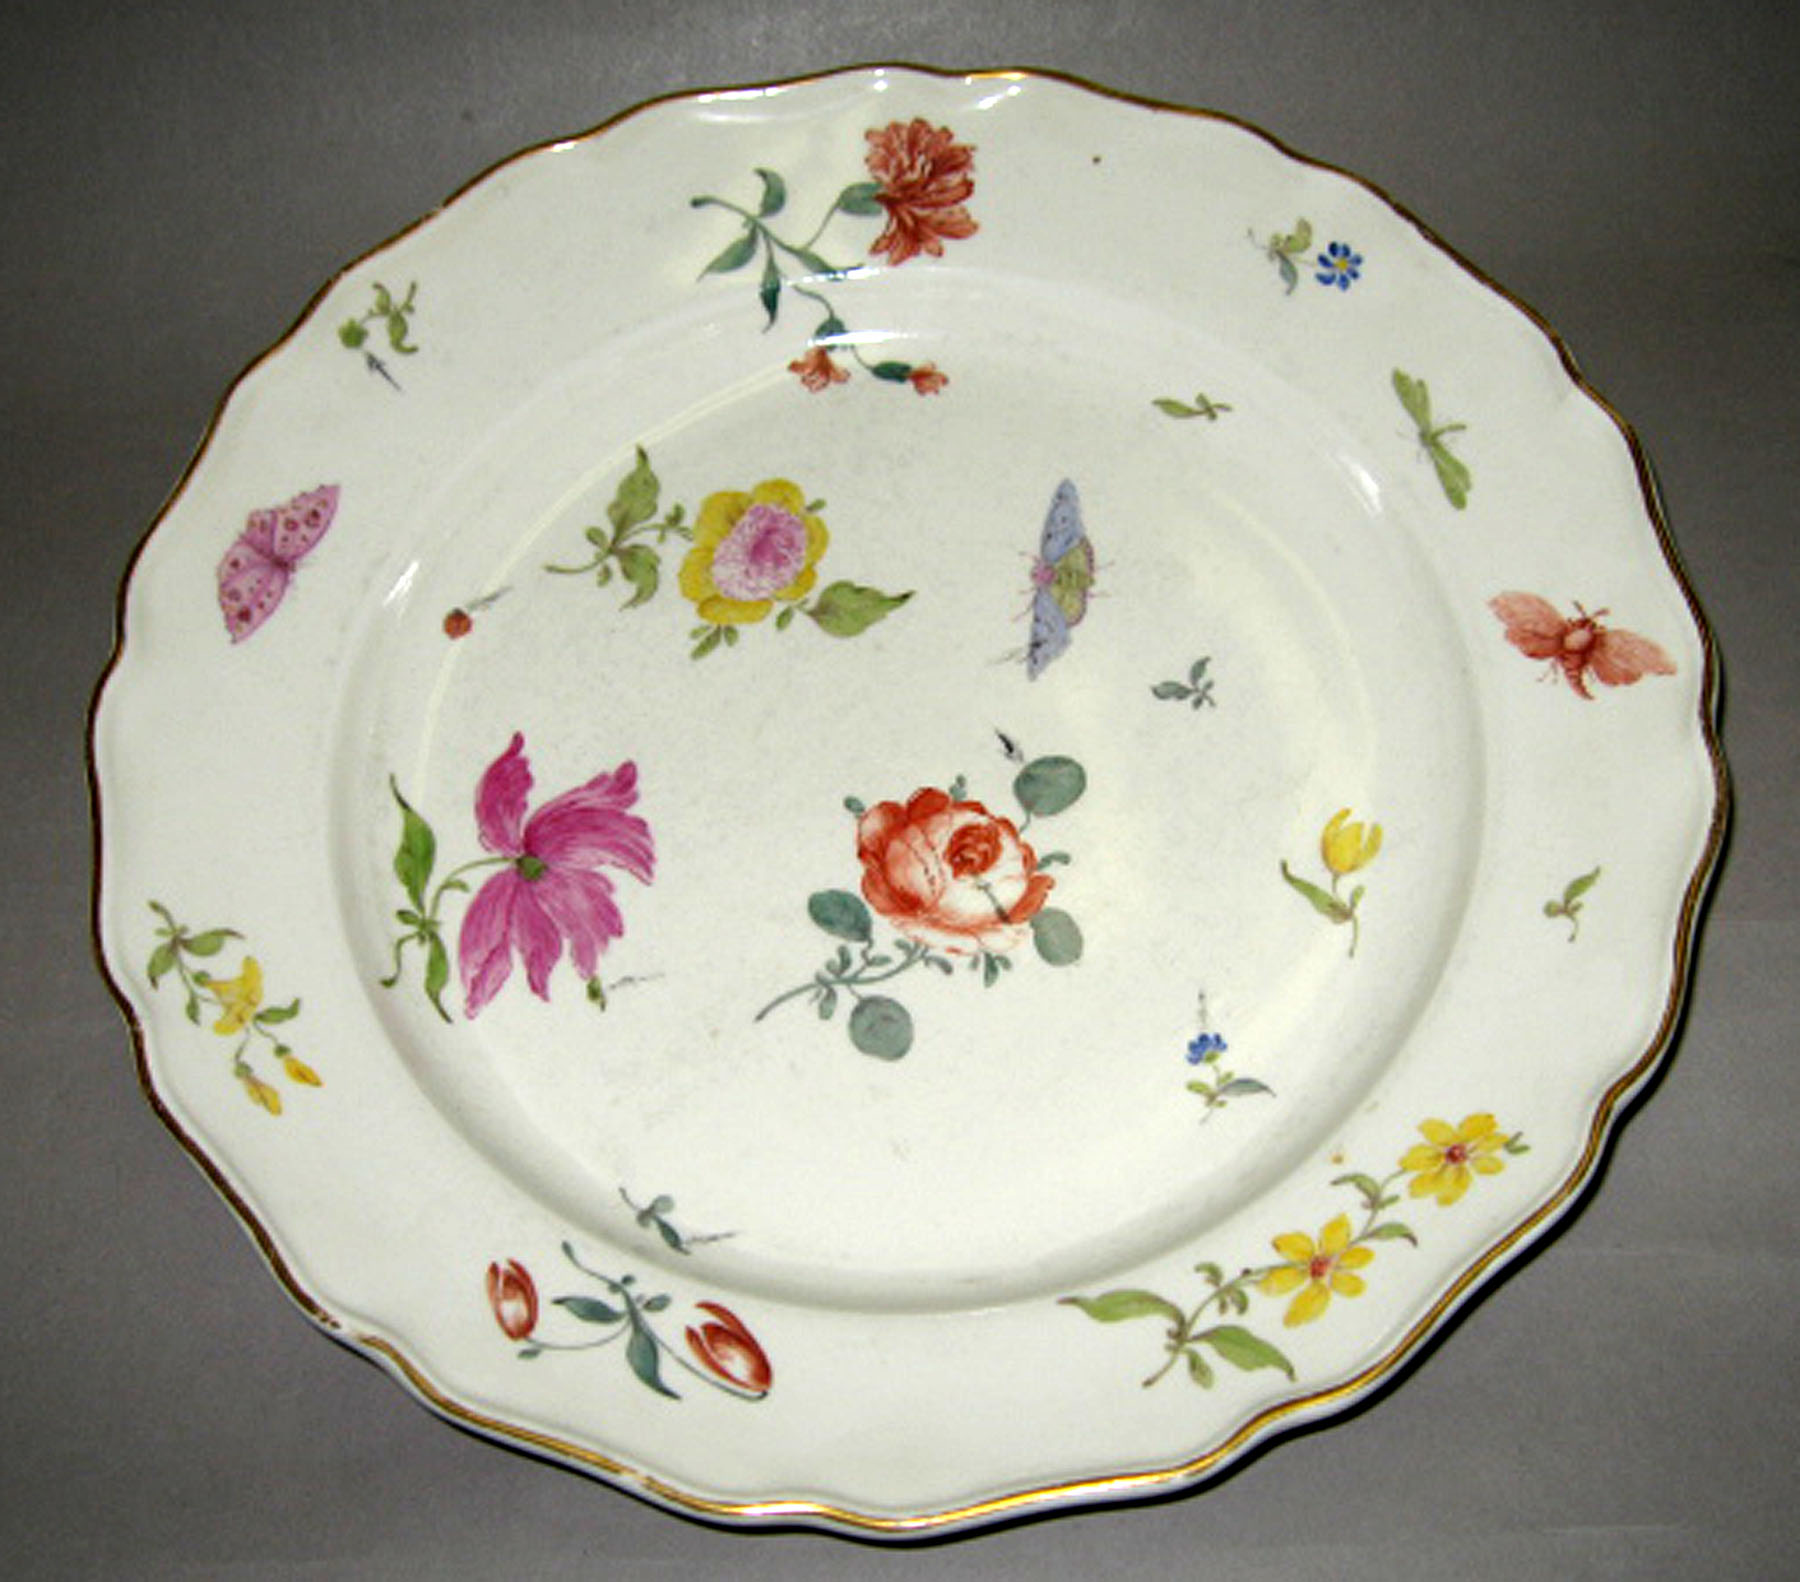 1952.0313 Porcelain plate